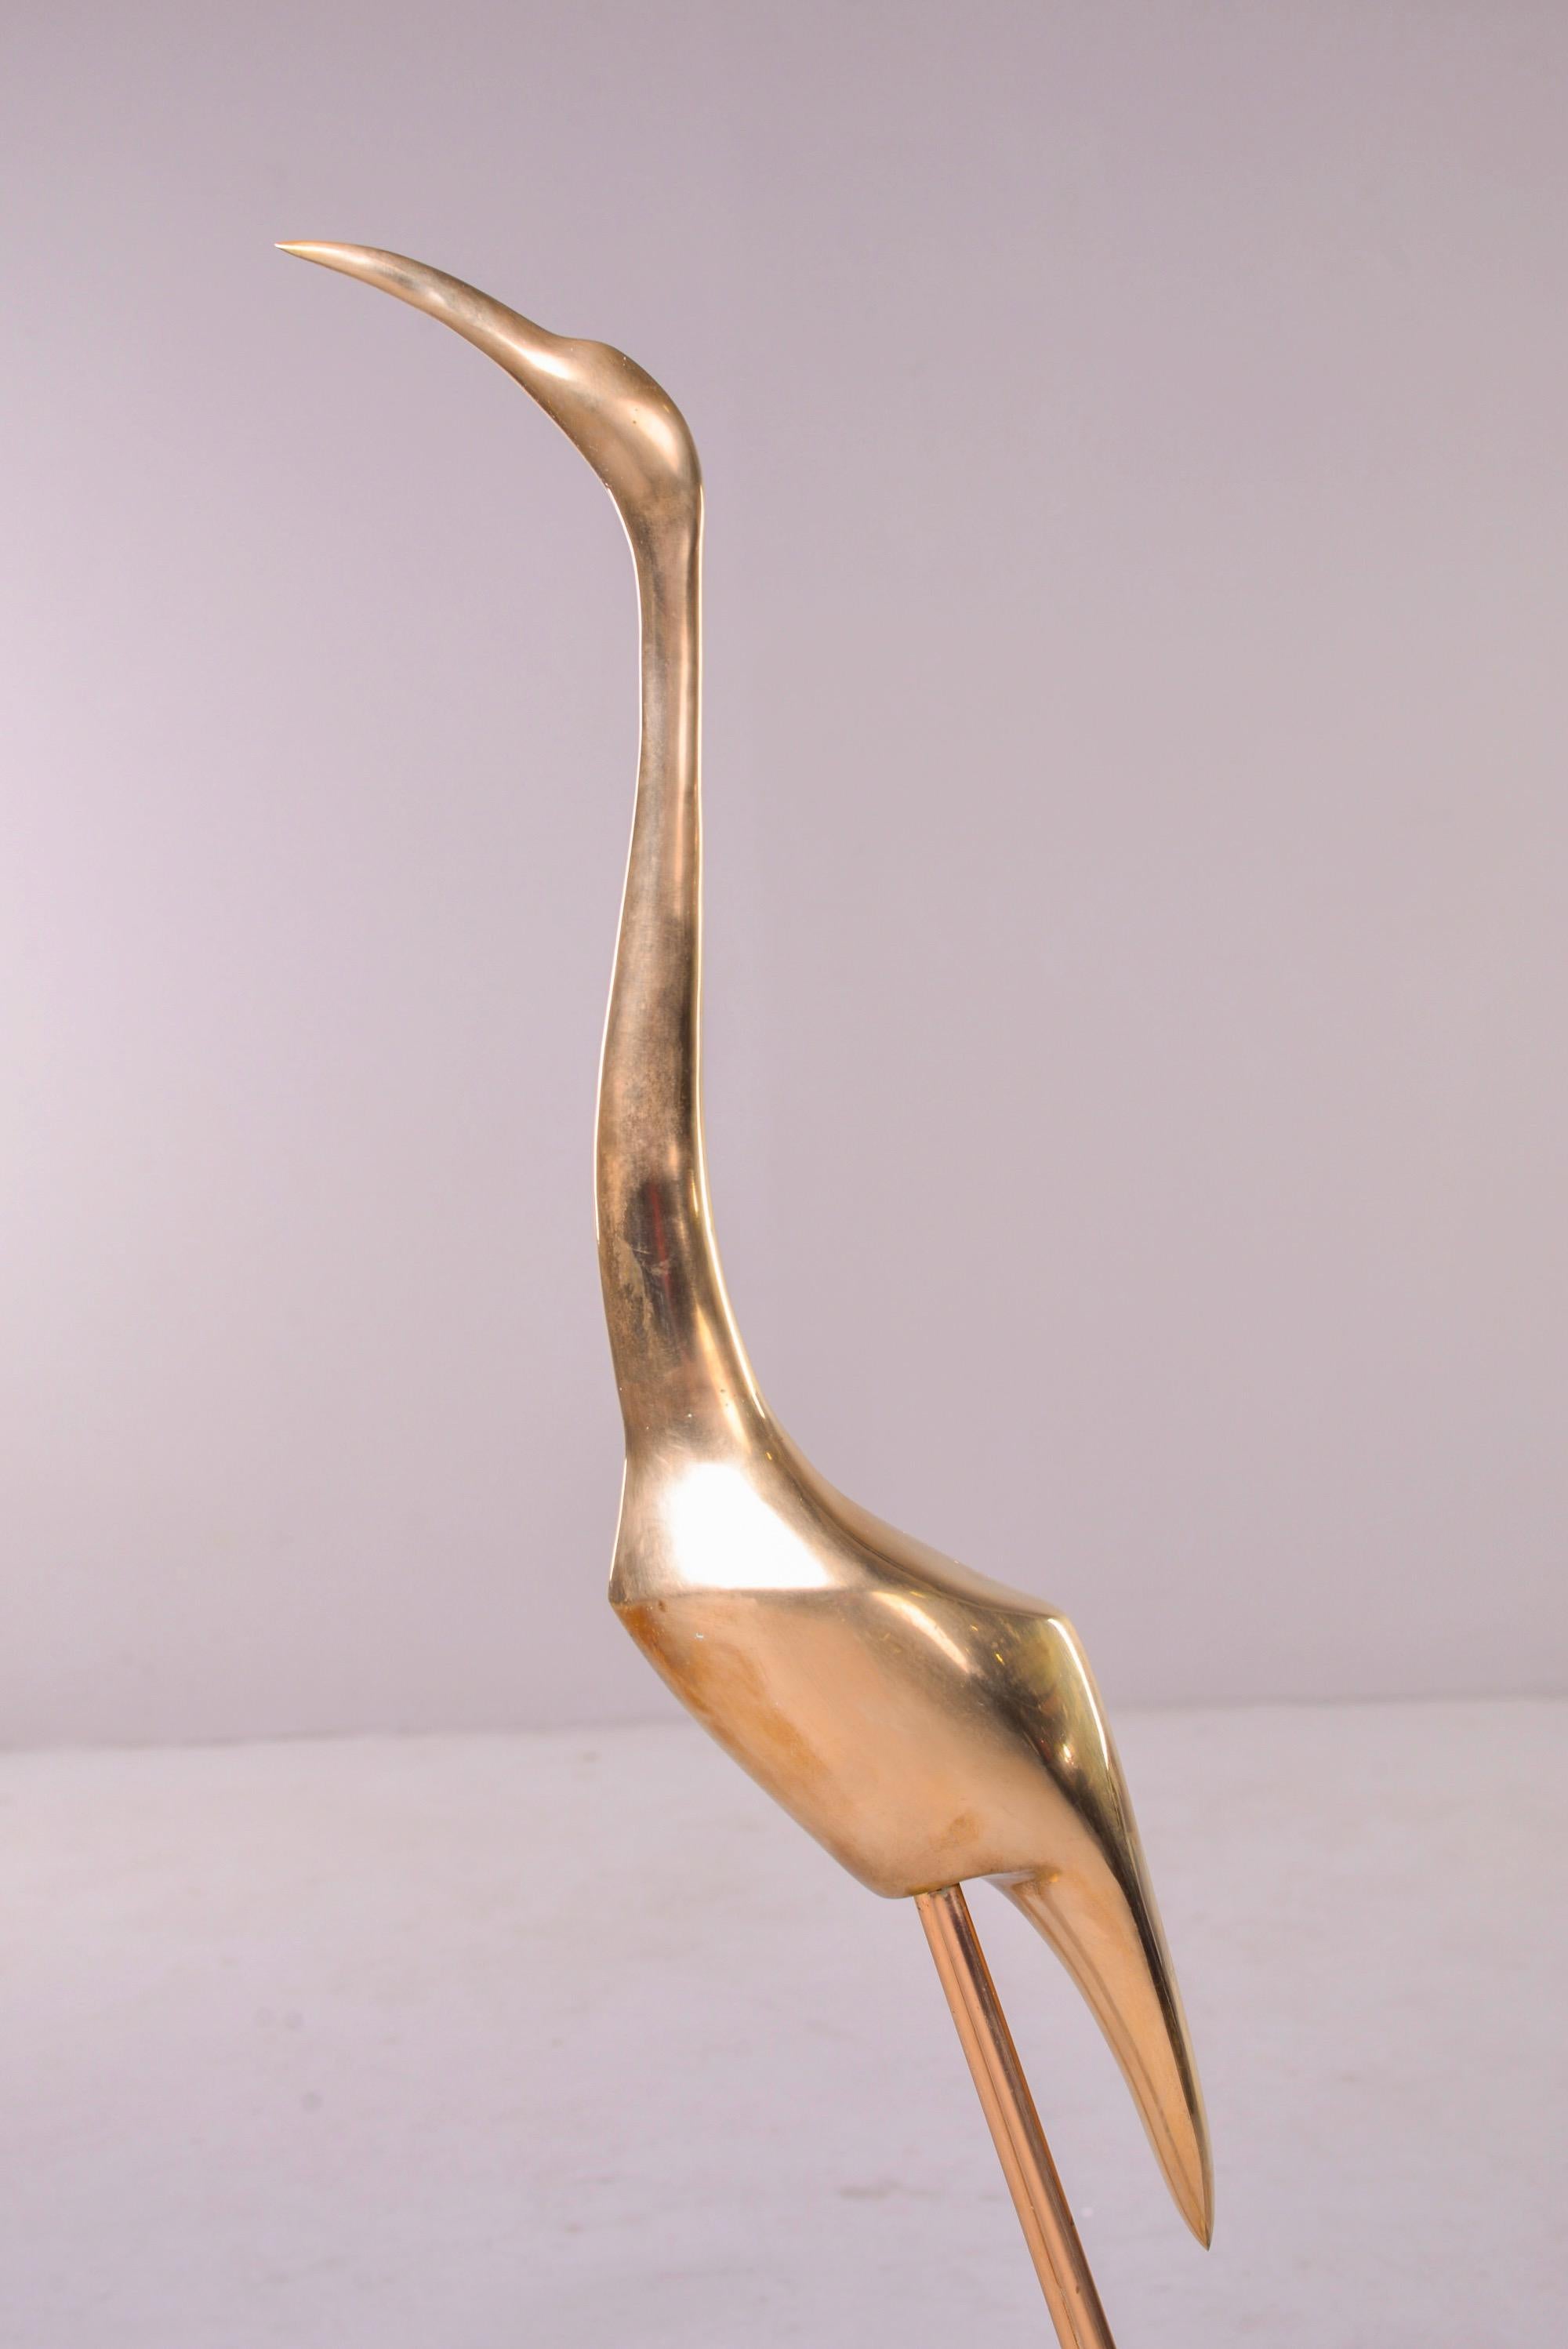 American Tall Slender Curtis Jere Brass Crane or Heron